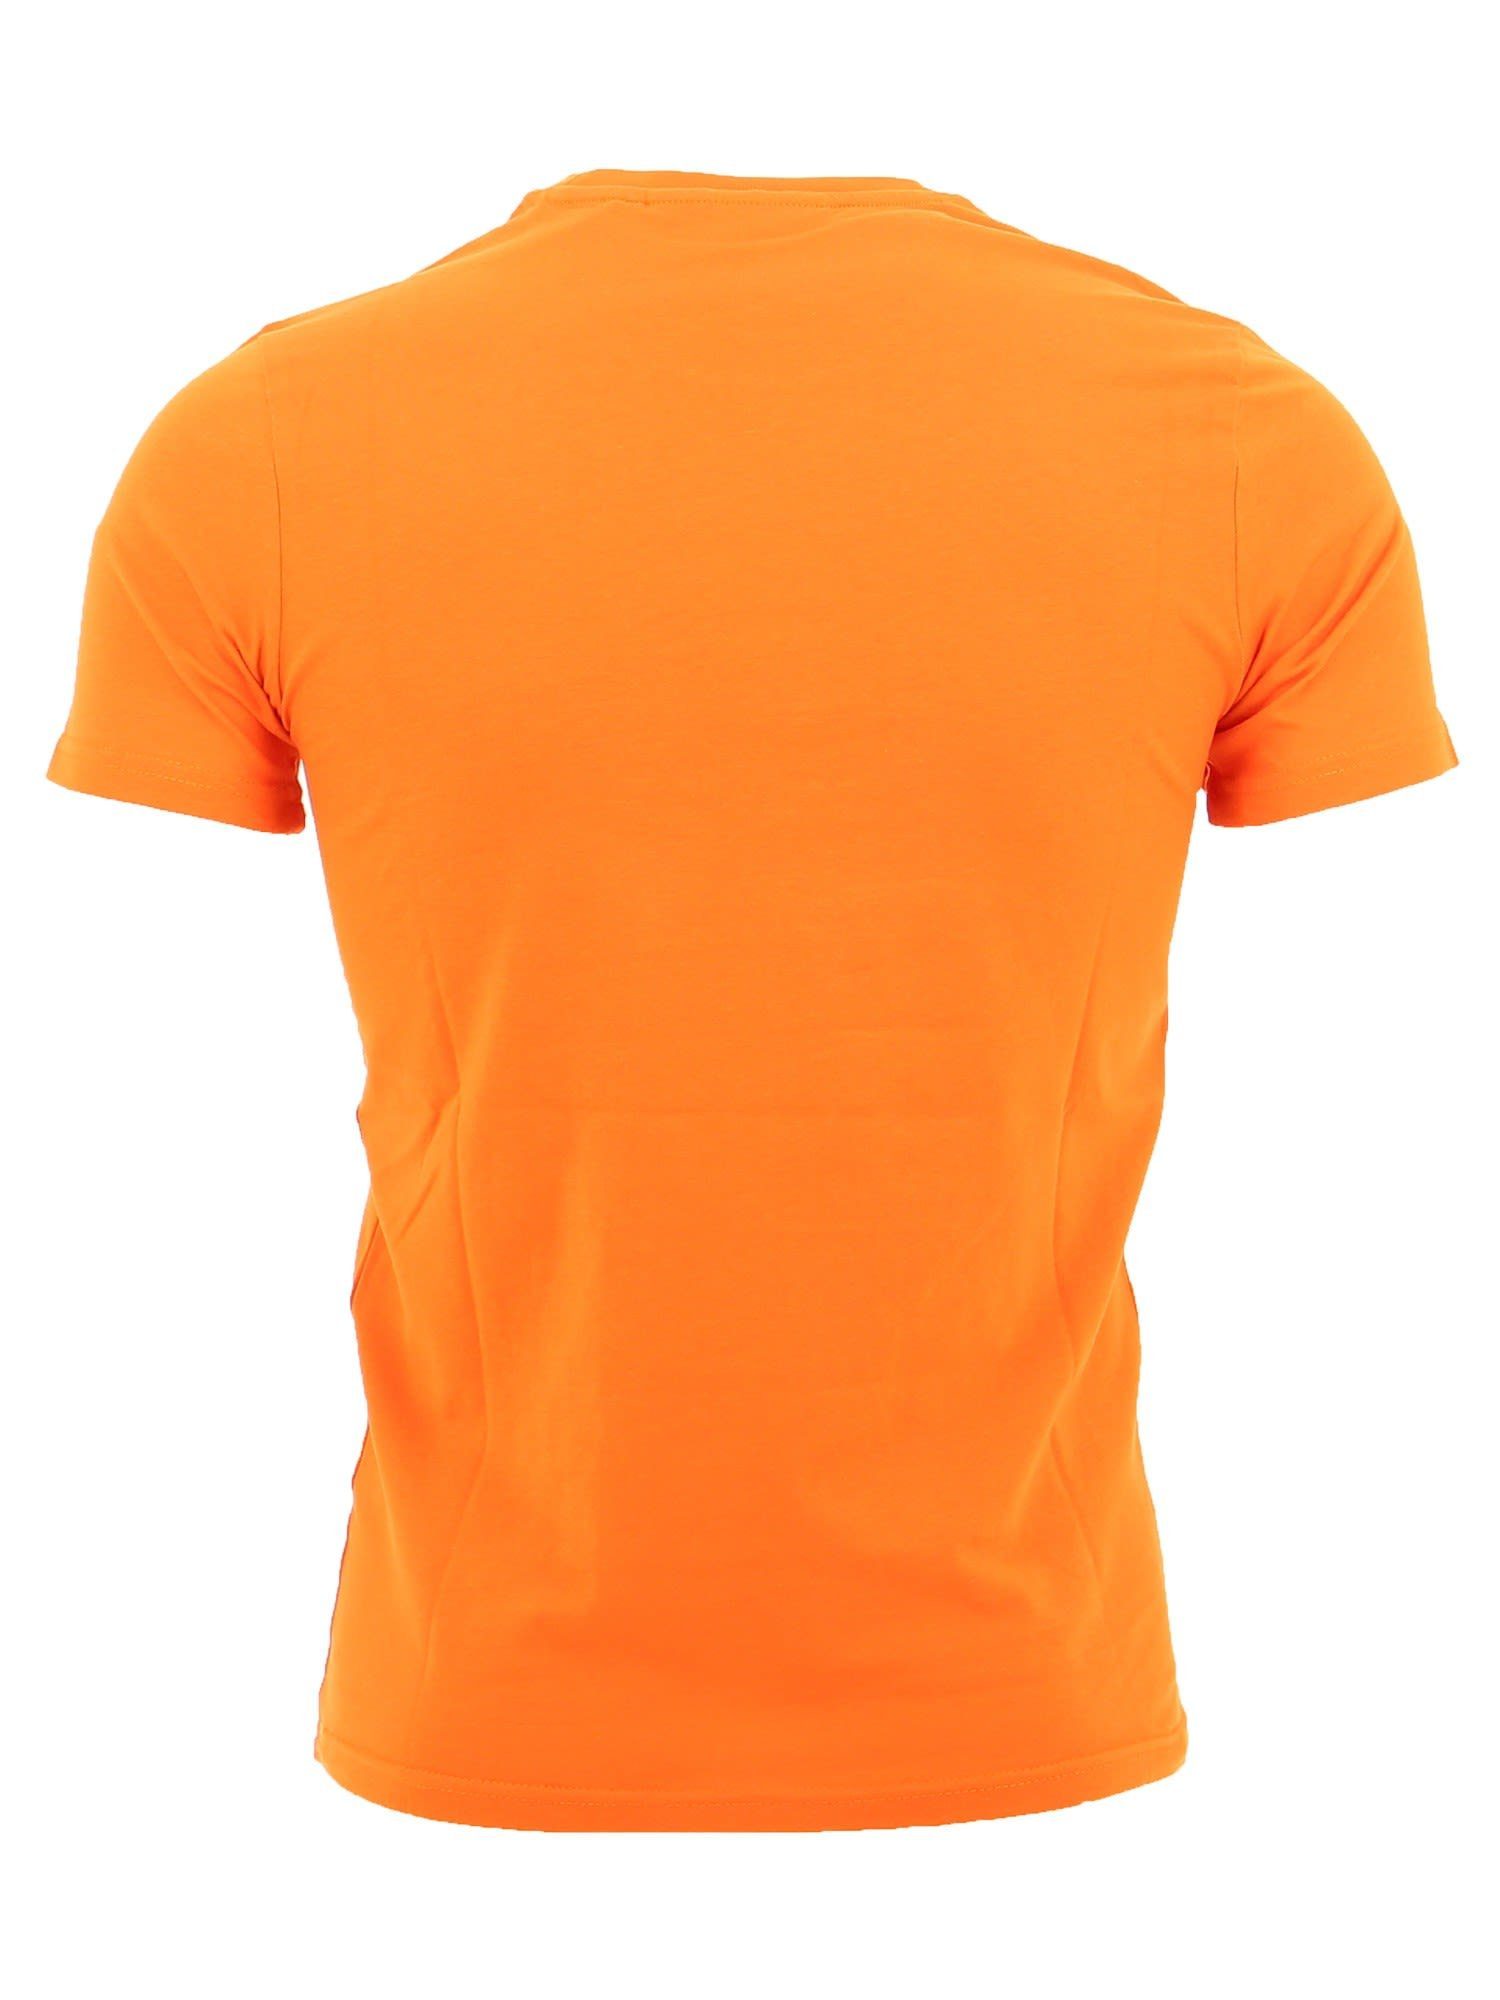 Peak Performance T-Shirt Peak Performance M Ground Herren Orange Tee Altitude 2